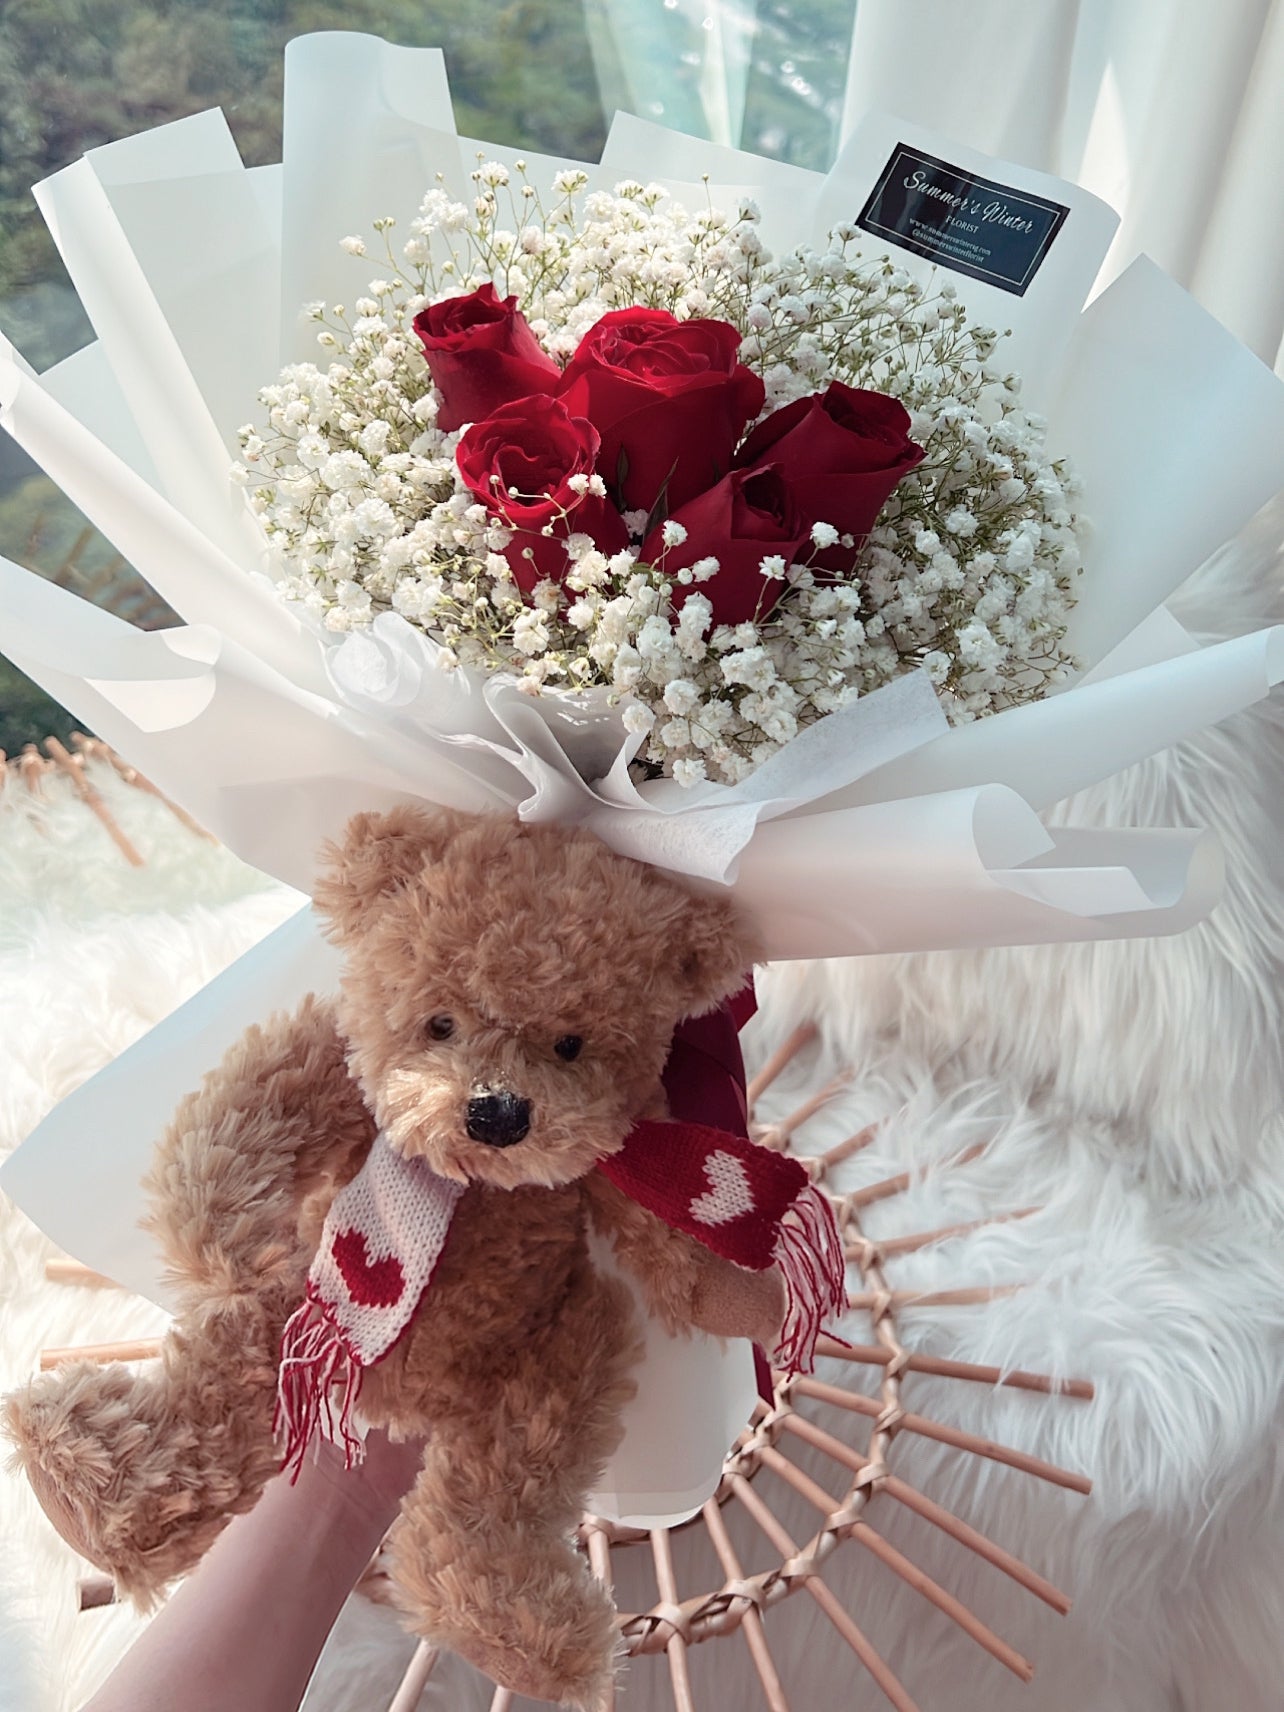 Roses & bear bouquet